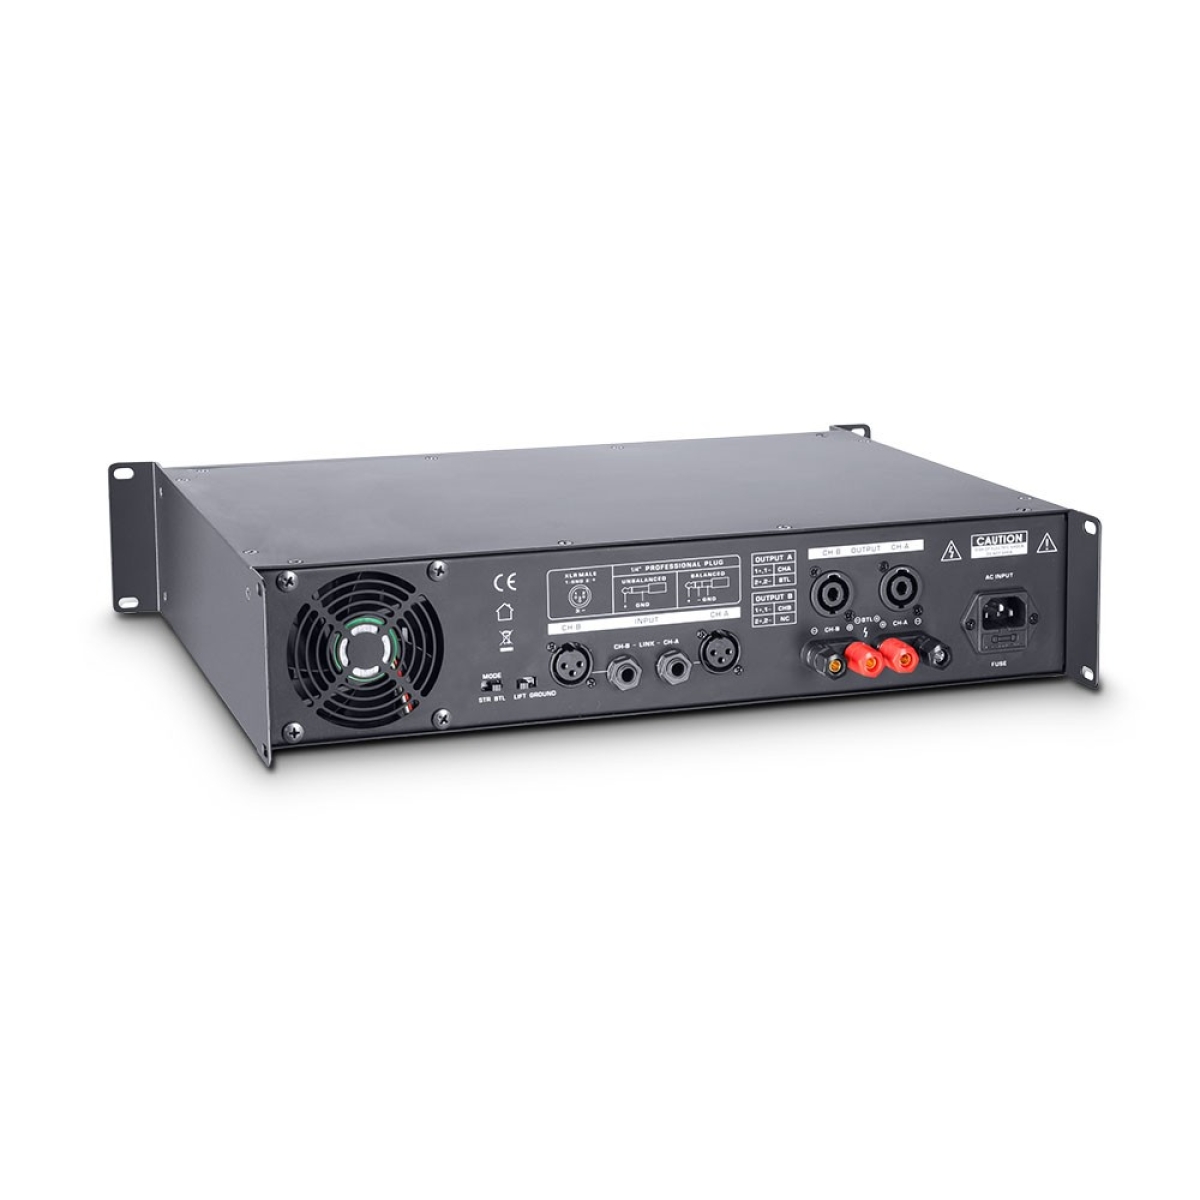 LD Systems dj500 Power Amplifier. LD Systems DJ 500. М500 Power Amplifier цена Тюмень. Мощность 500 дж